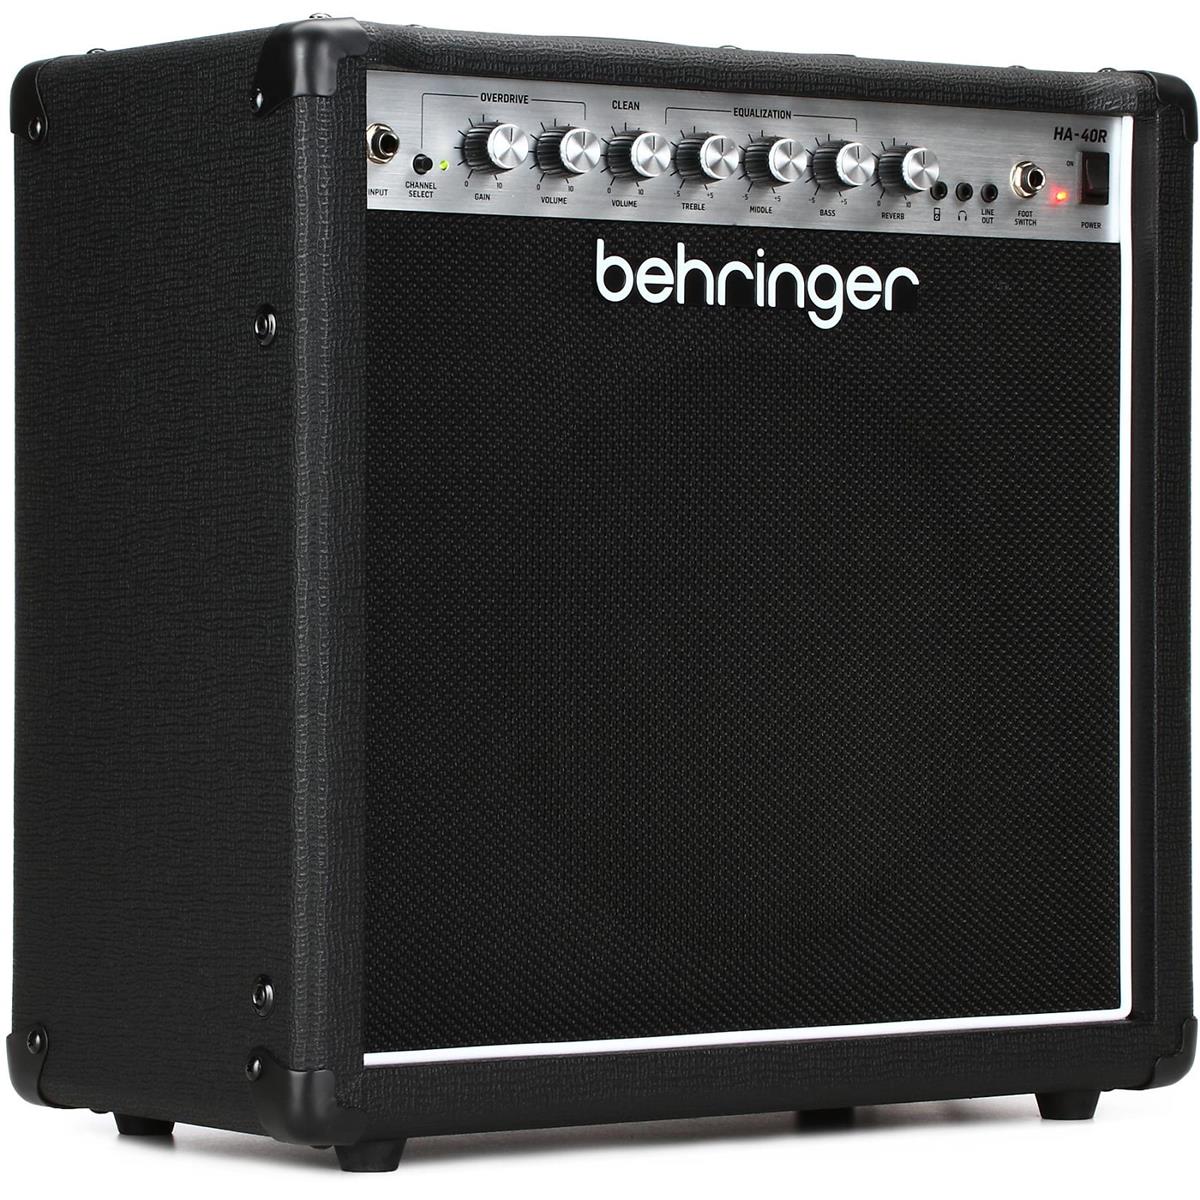 Behringer HA-40R 40W 2-Channel Guitar Amplifier with 10" Bugera Speaker -  000-E9K02-00010